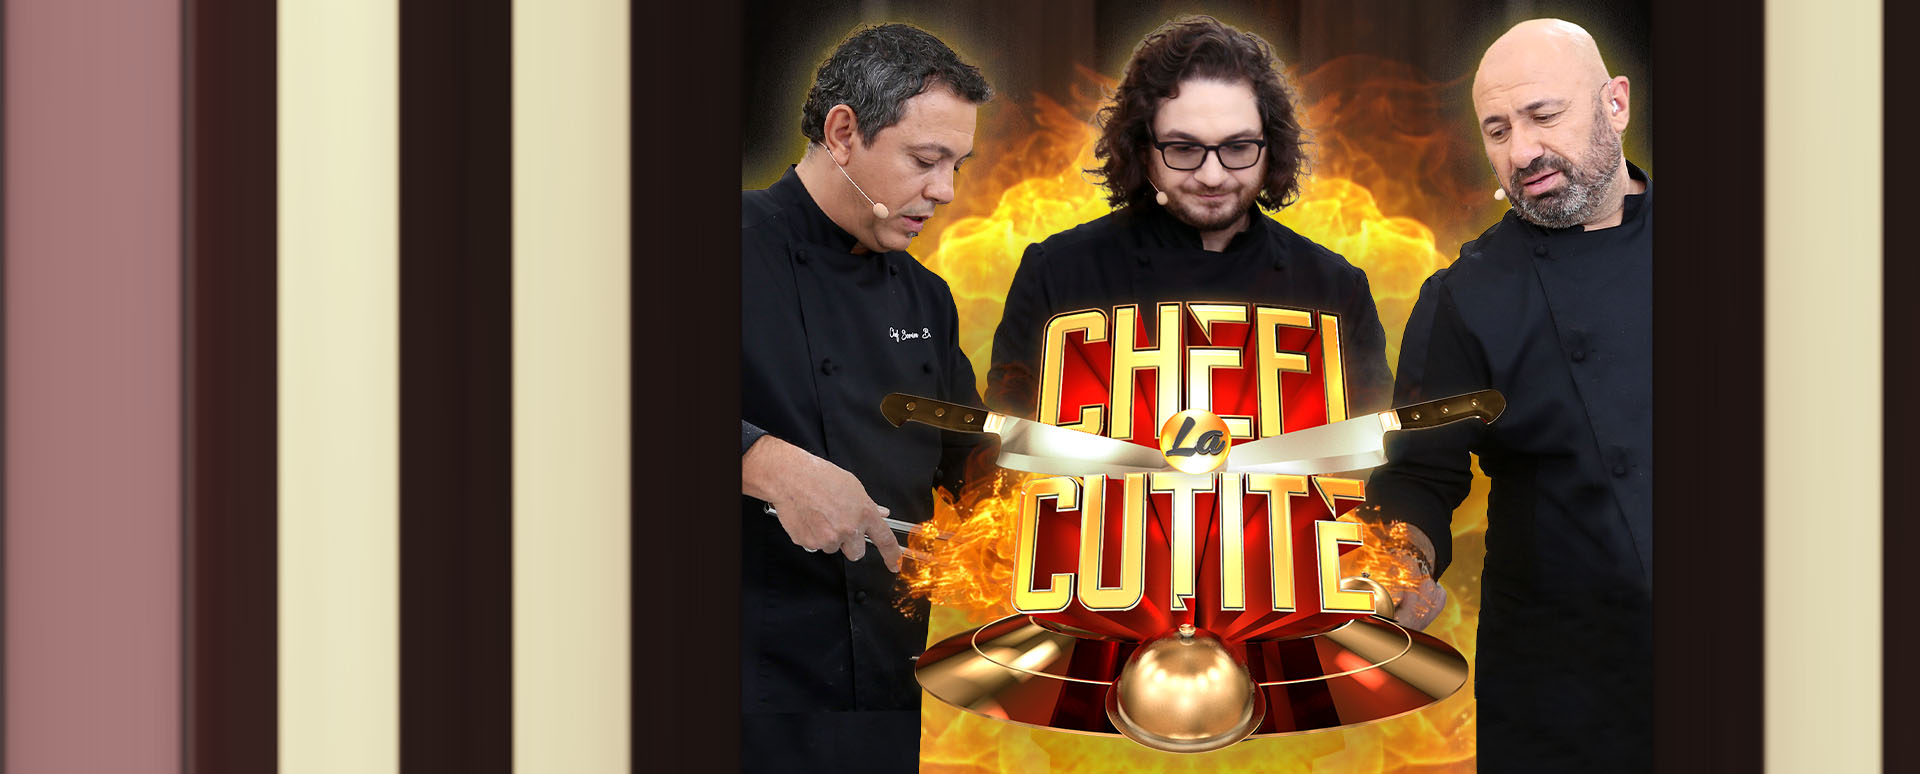 Vezi Chefi la cutite Sezonul 9 online pe AntenaPlay!